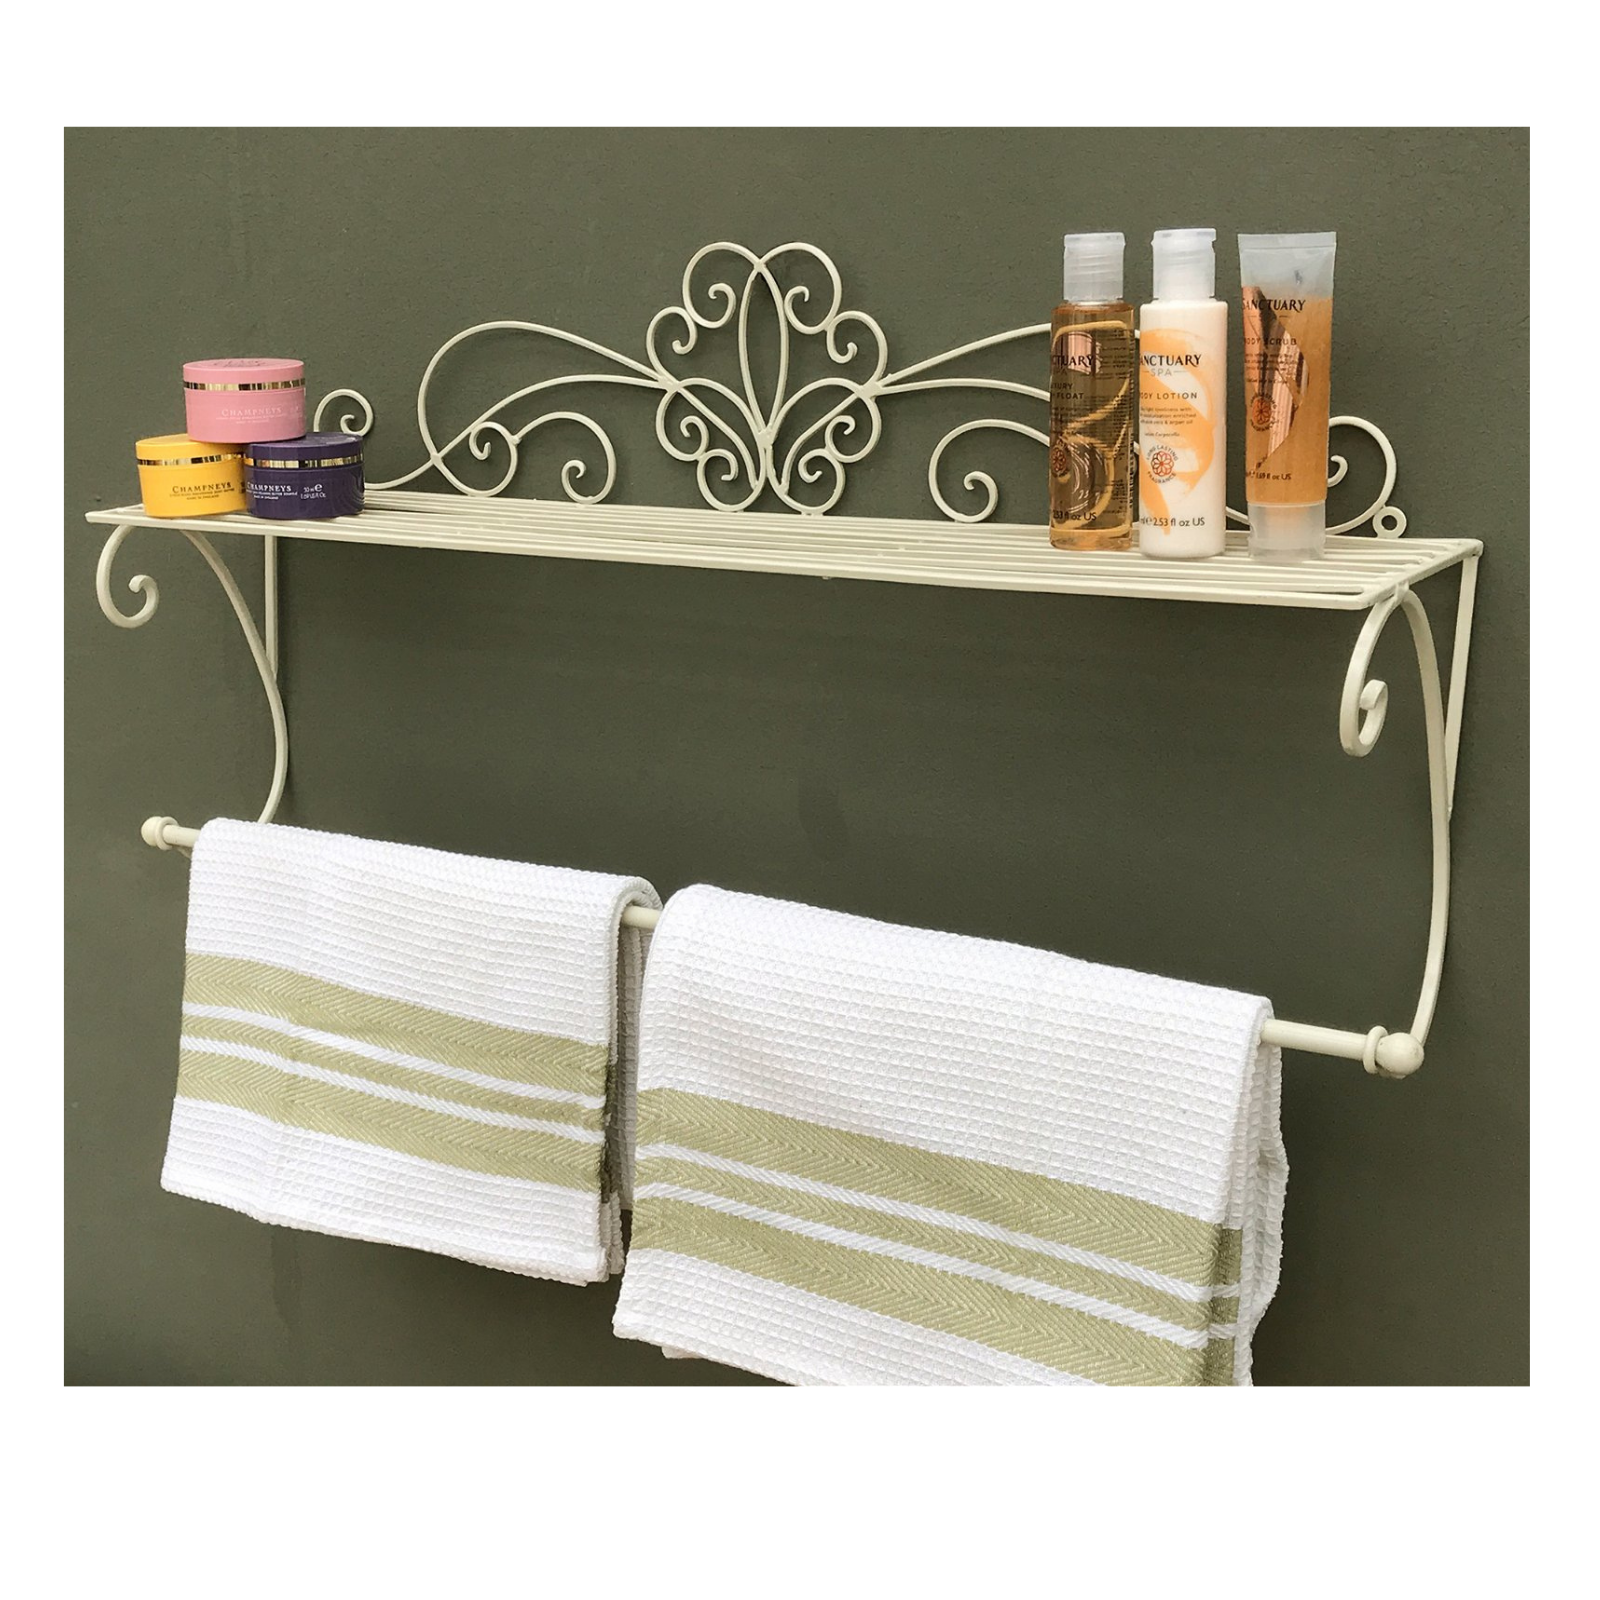 Cream Scroll Towel Rail And Shelf